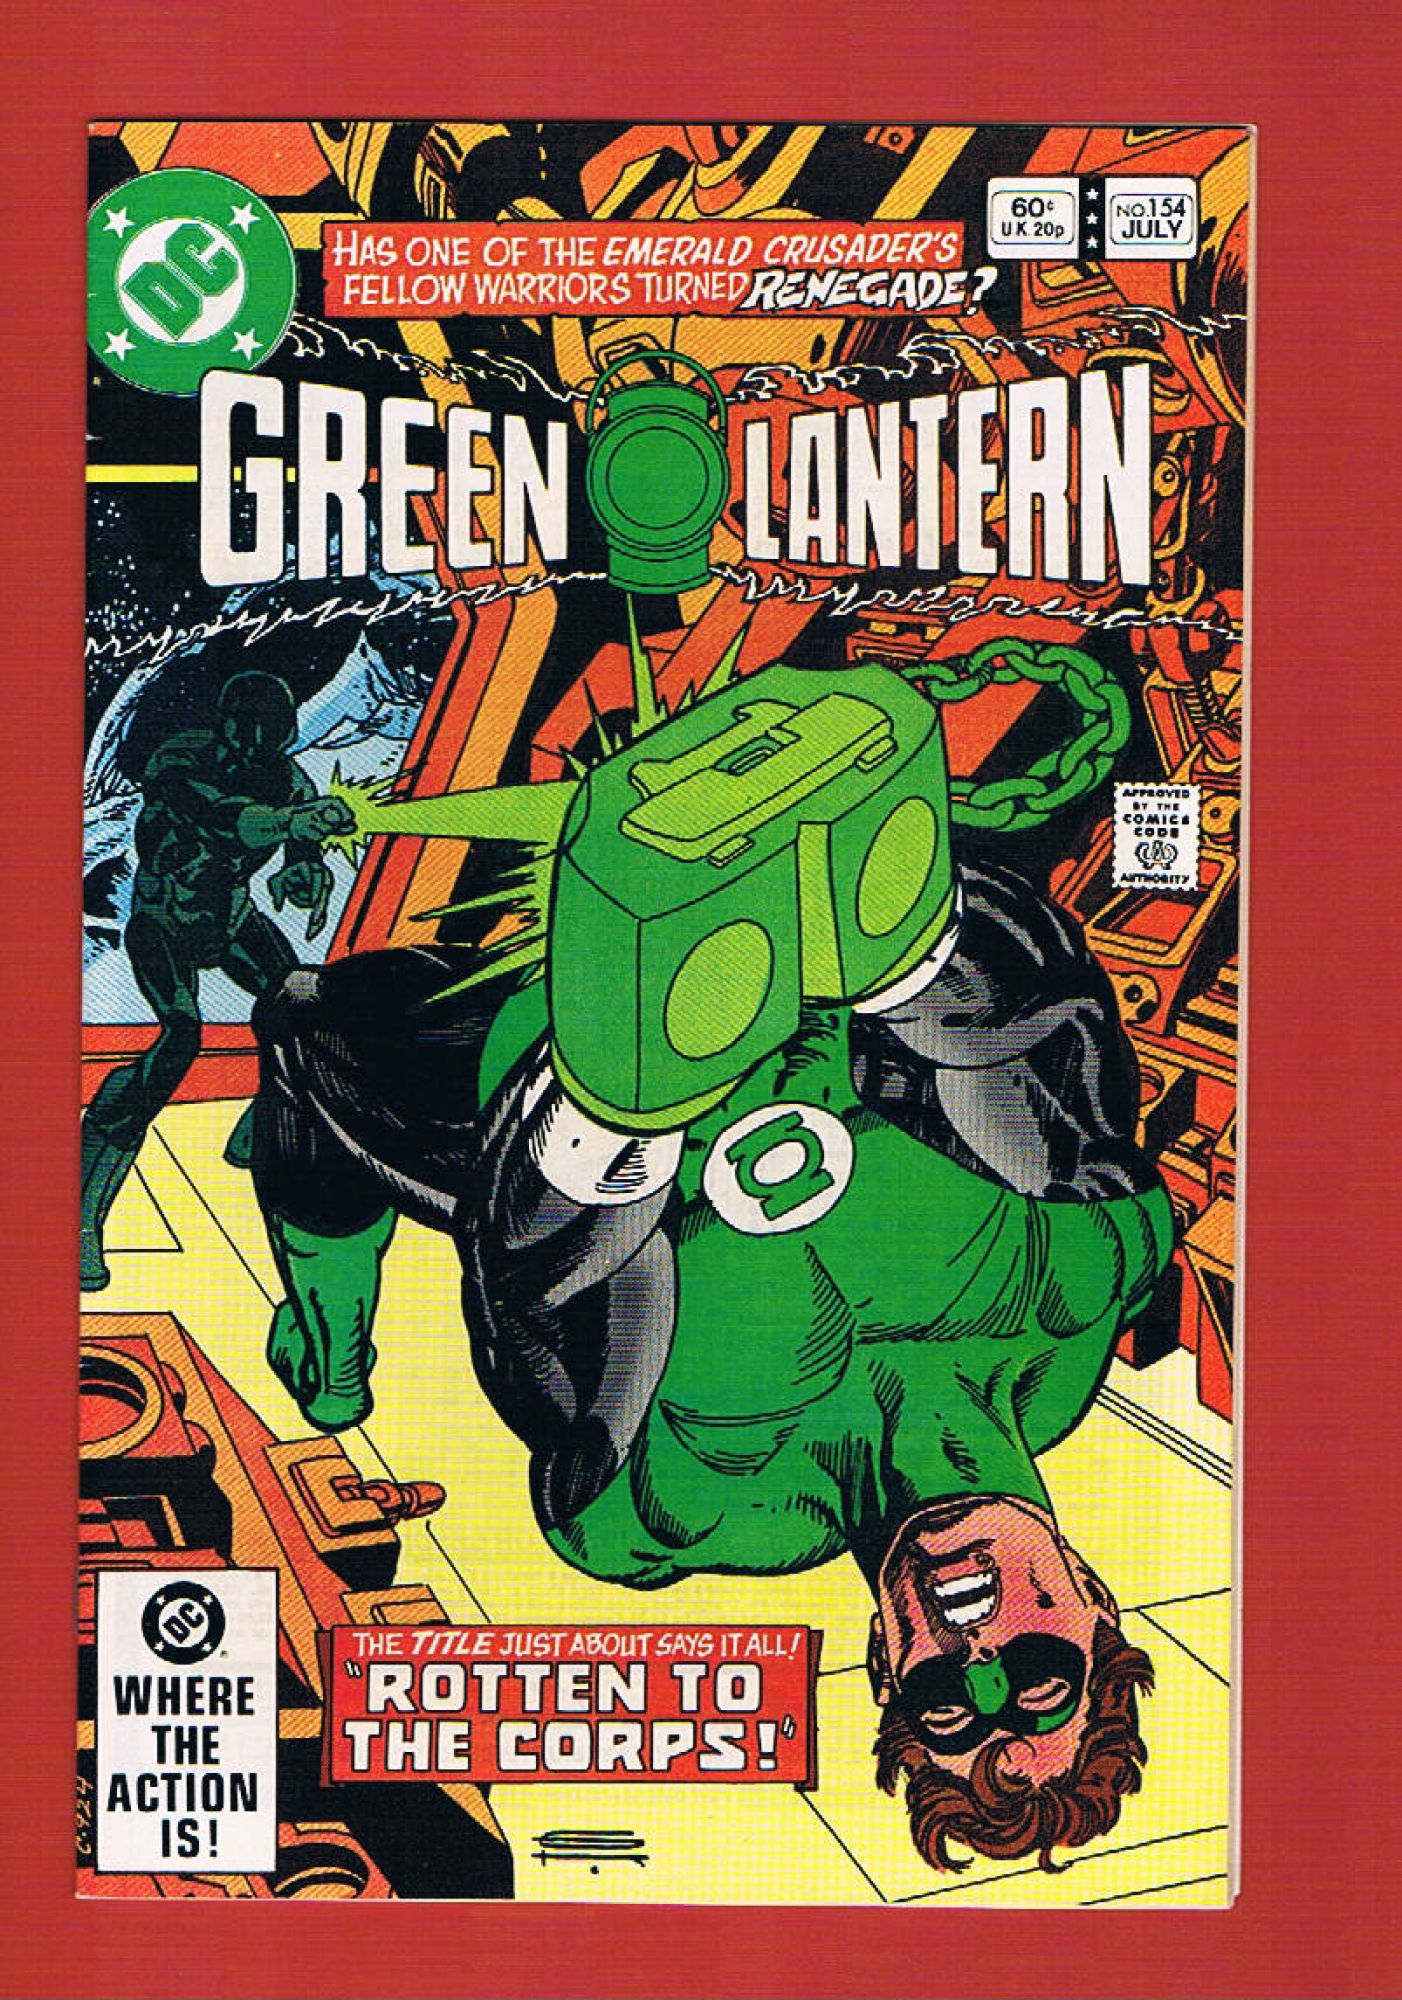 Green Lantern #154, Jul 1982, 9.2 NM-